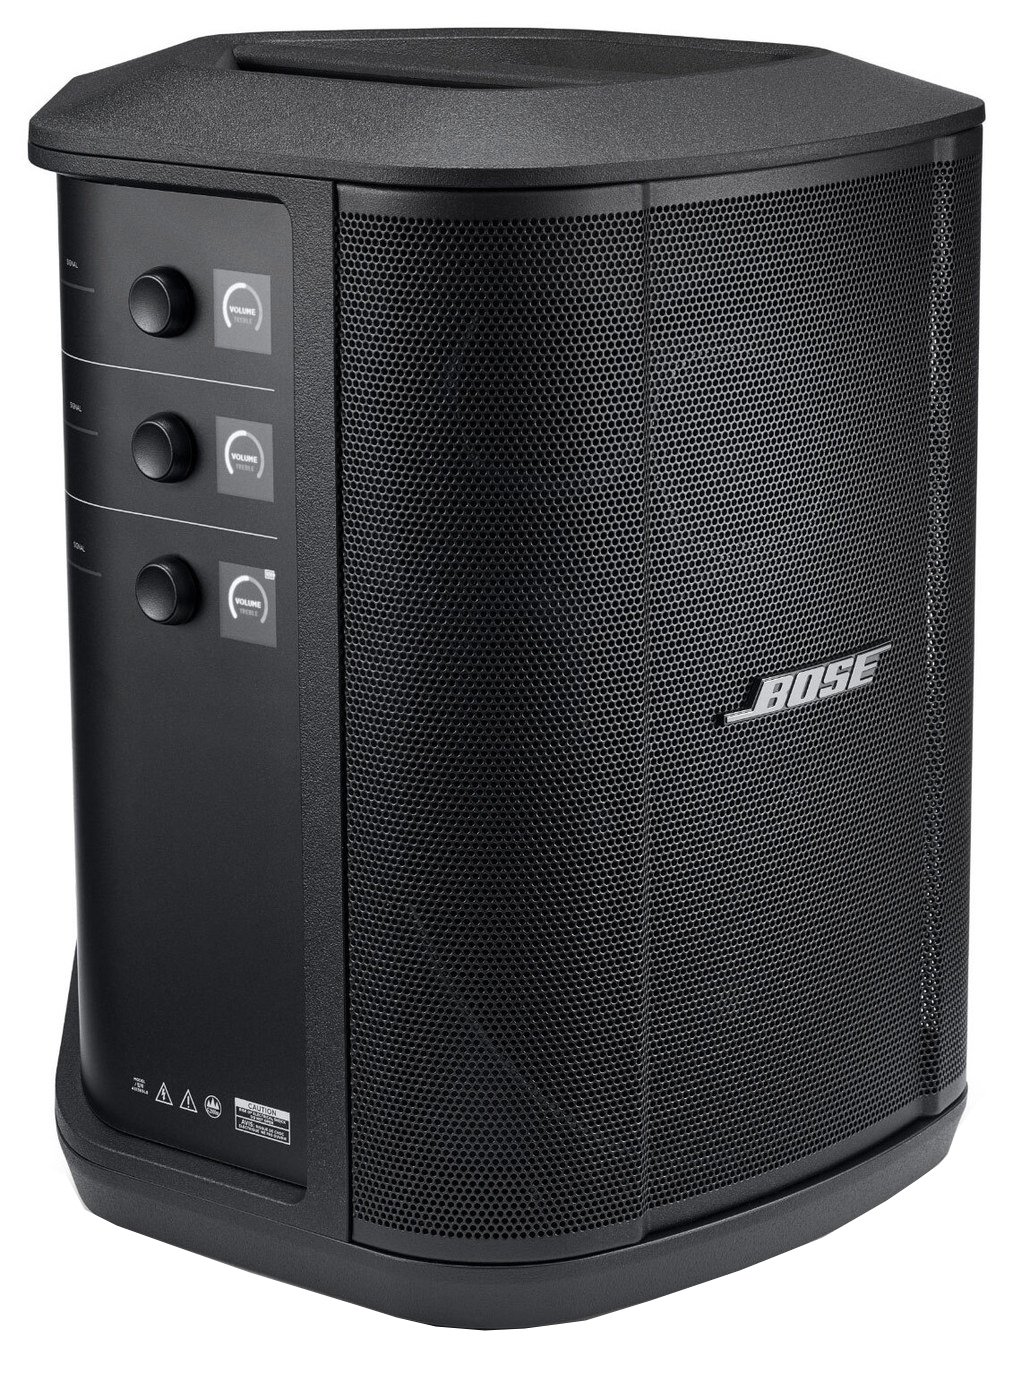 Bose S1 Pro Plus PA Portable Bluetooth Party System - Black